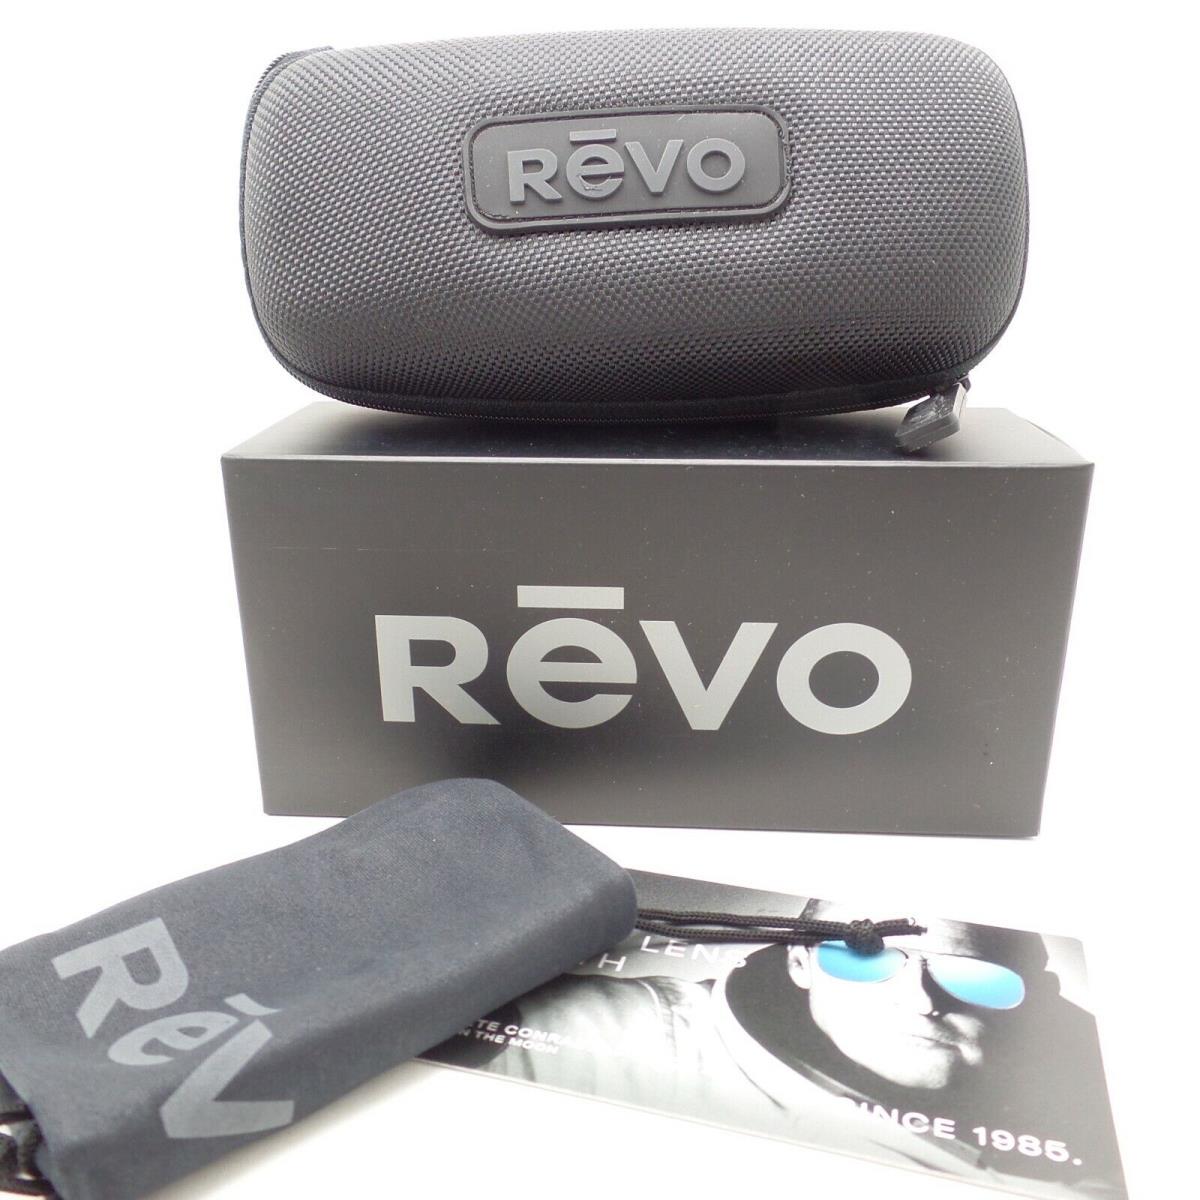 Revo sunglasses  - Matte Black Grey Frame, Graphite Lens